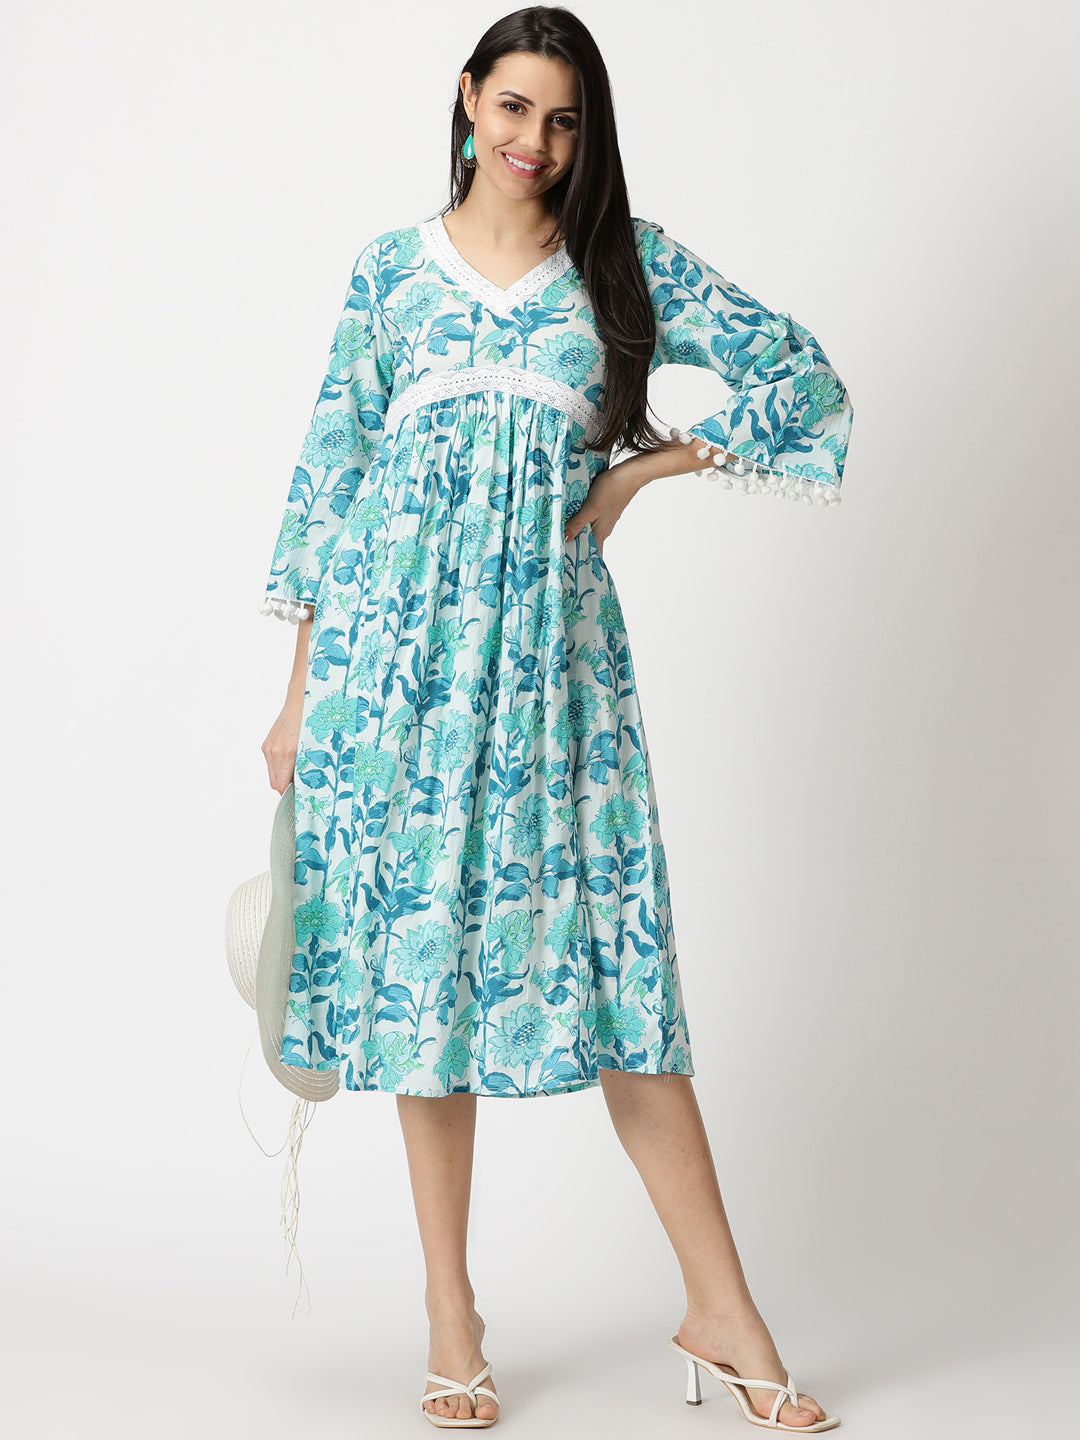 Whole sale pochampally dress material with same dupatta – DressesForWomen.IN